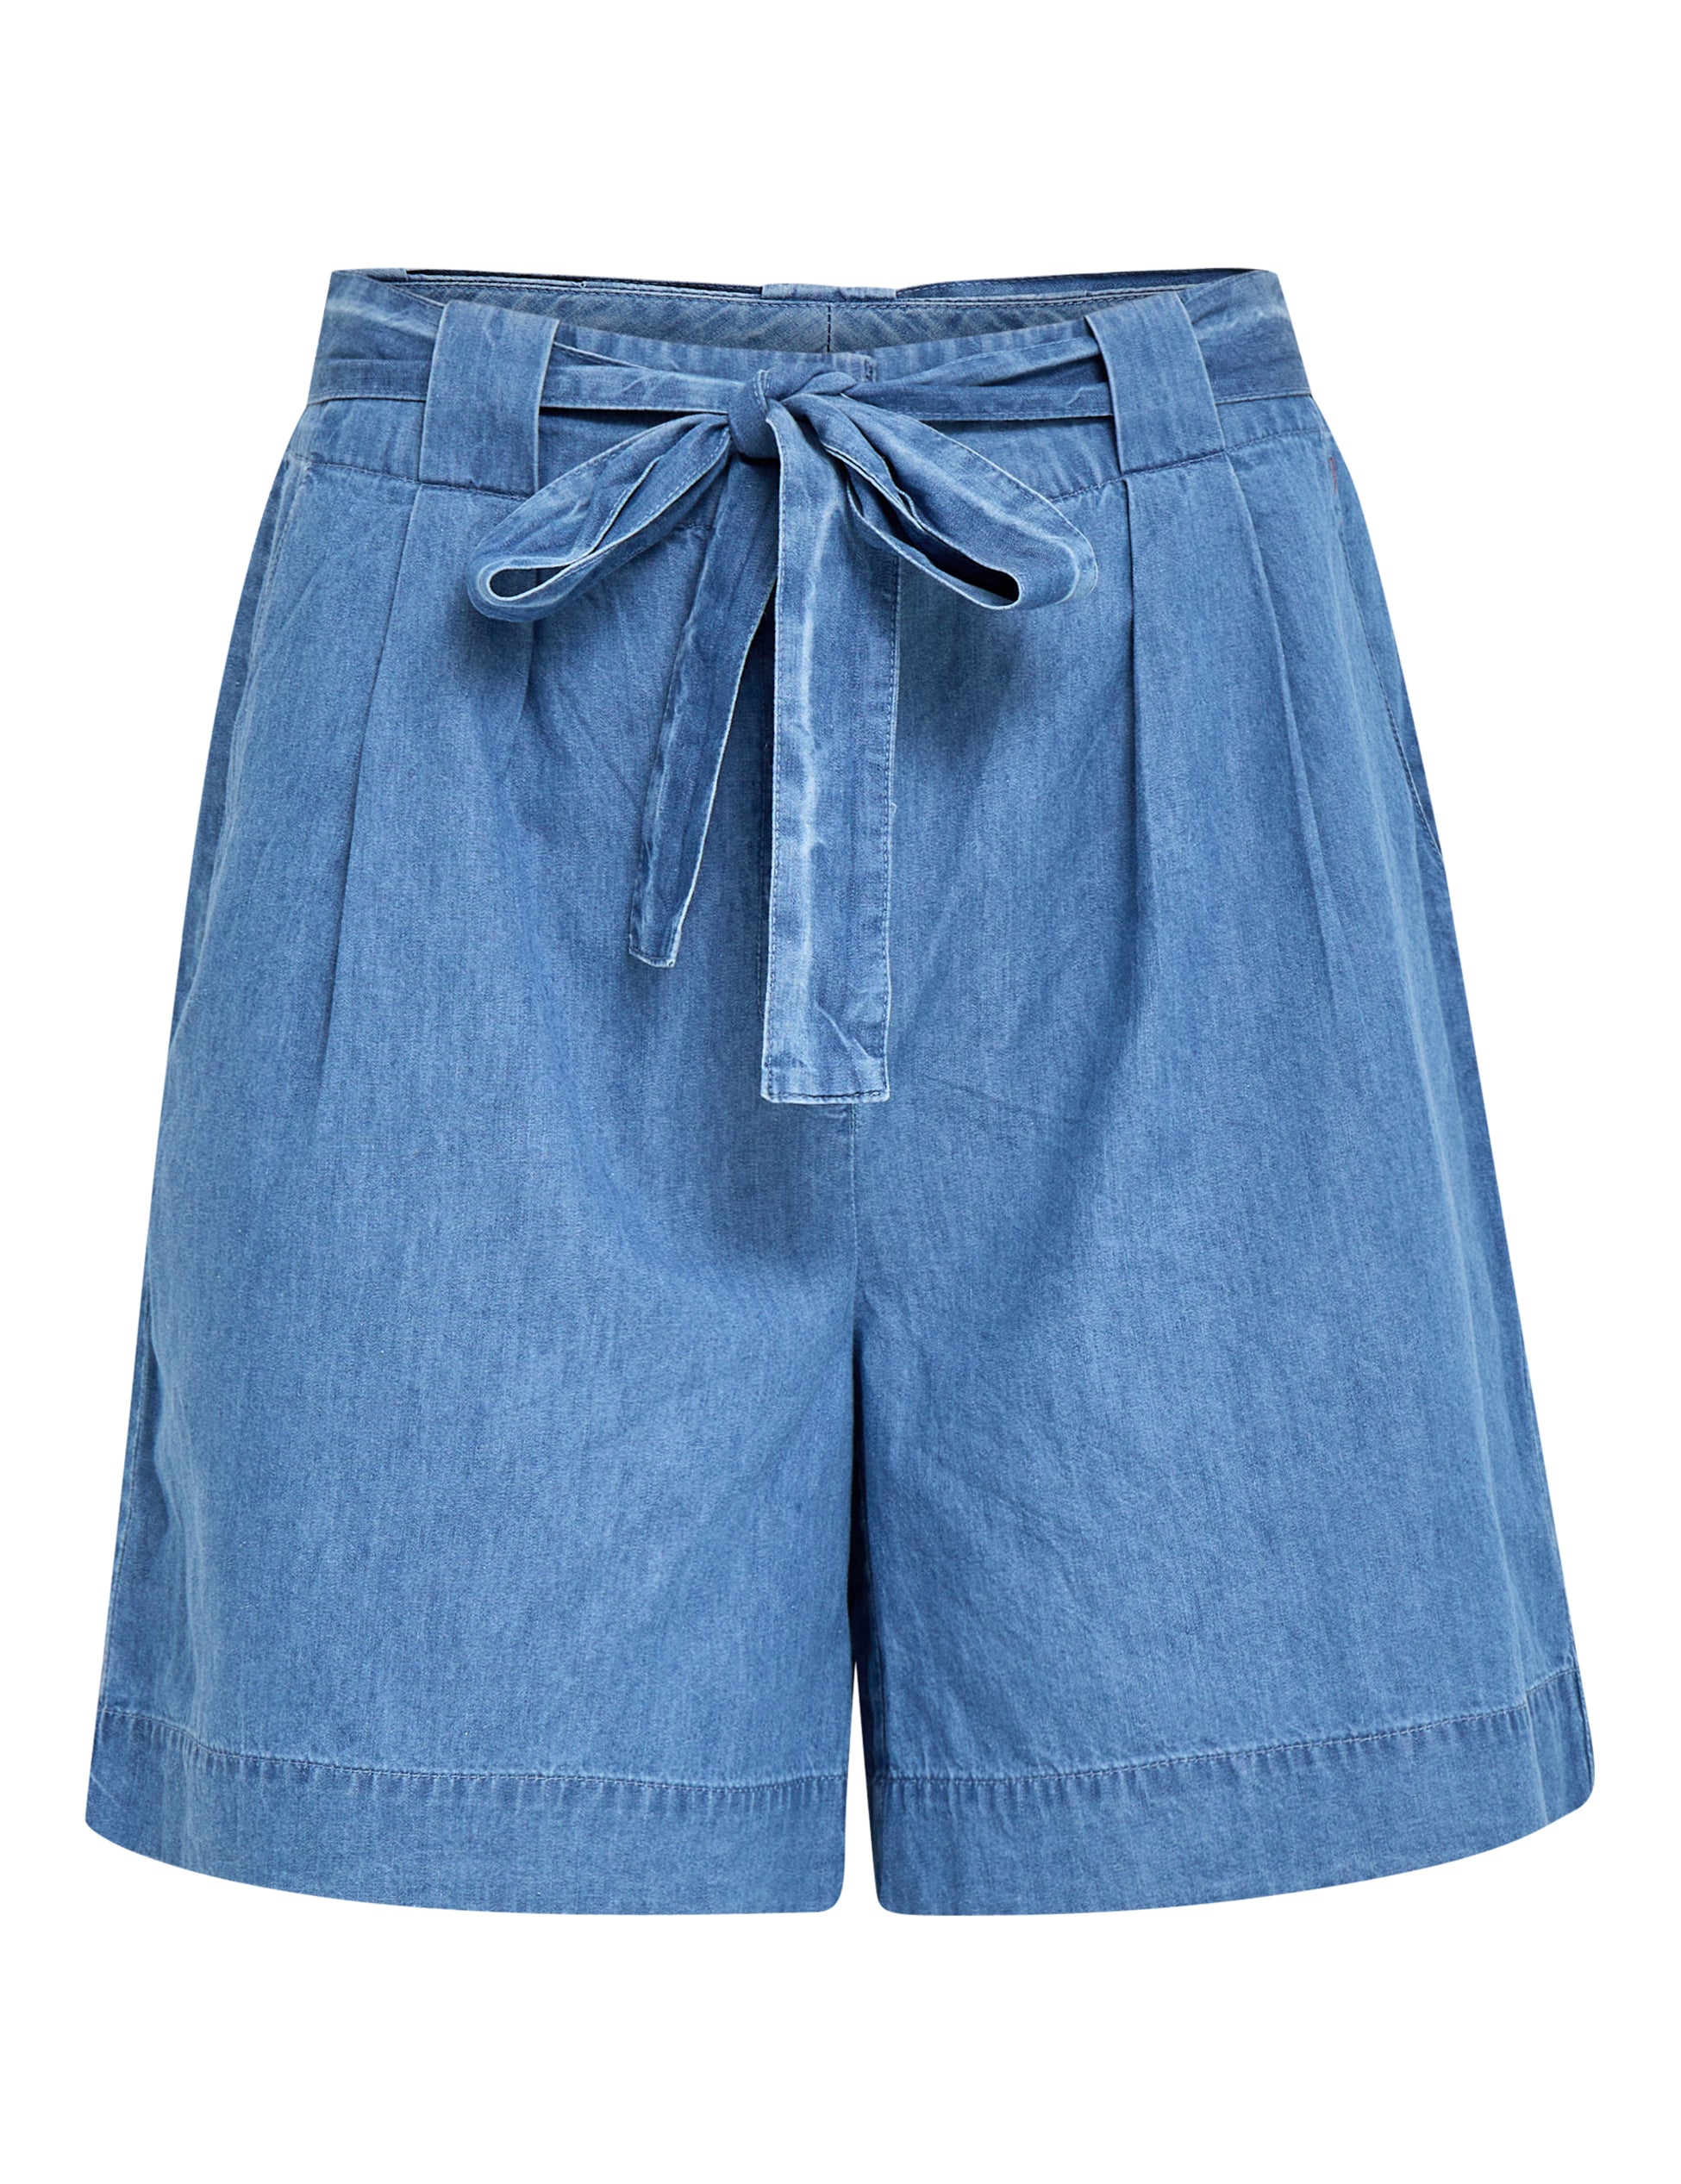 Peppercorn PCAllison Chambray Shorts Shorts 9600 Light Blue Wash